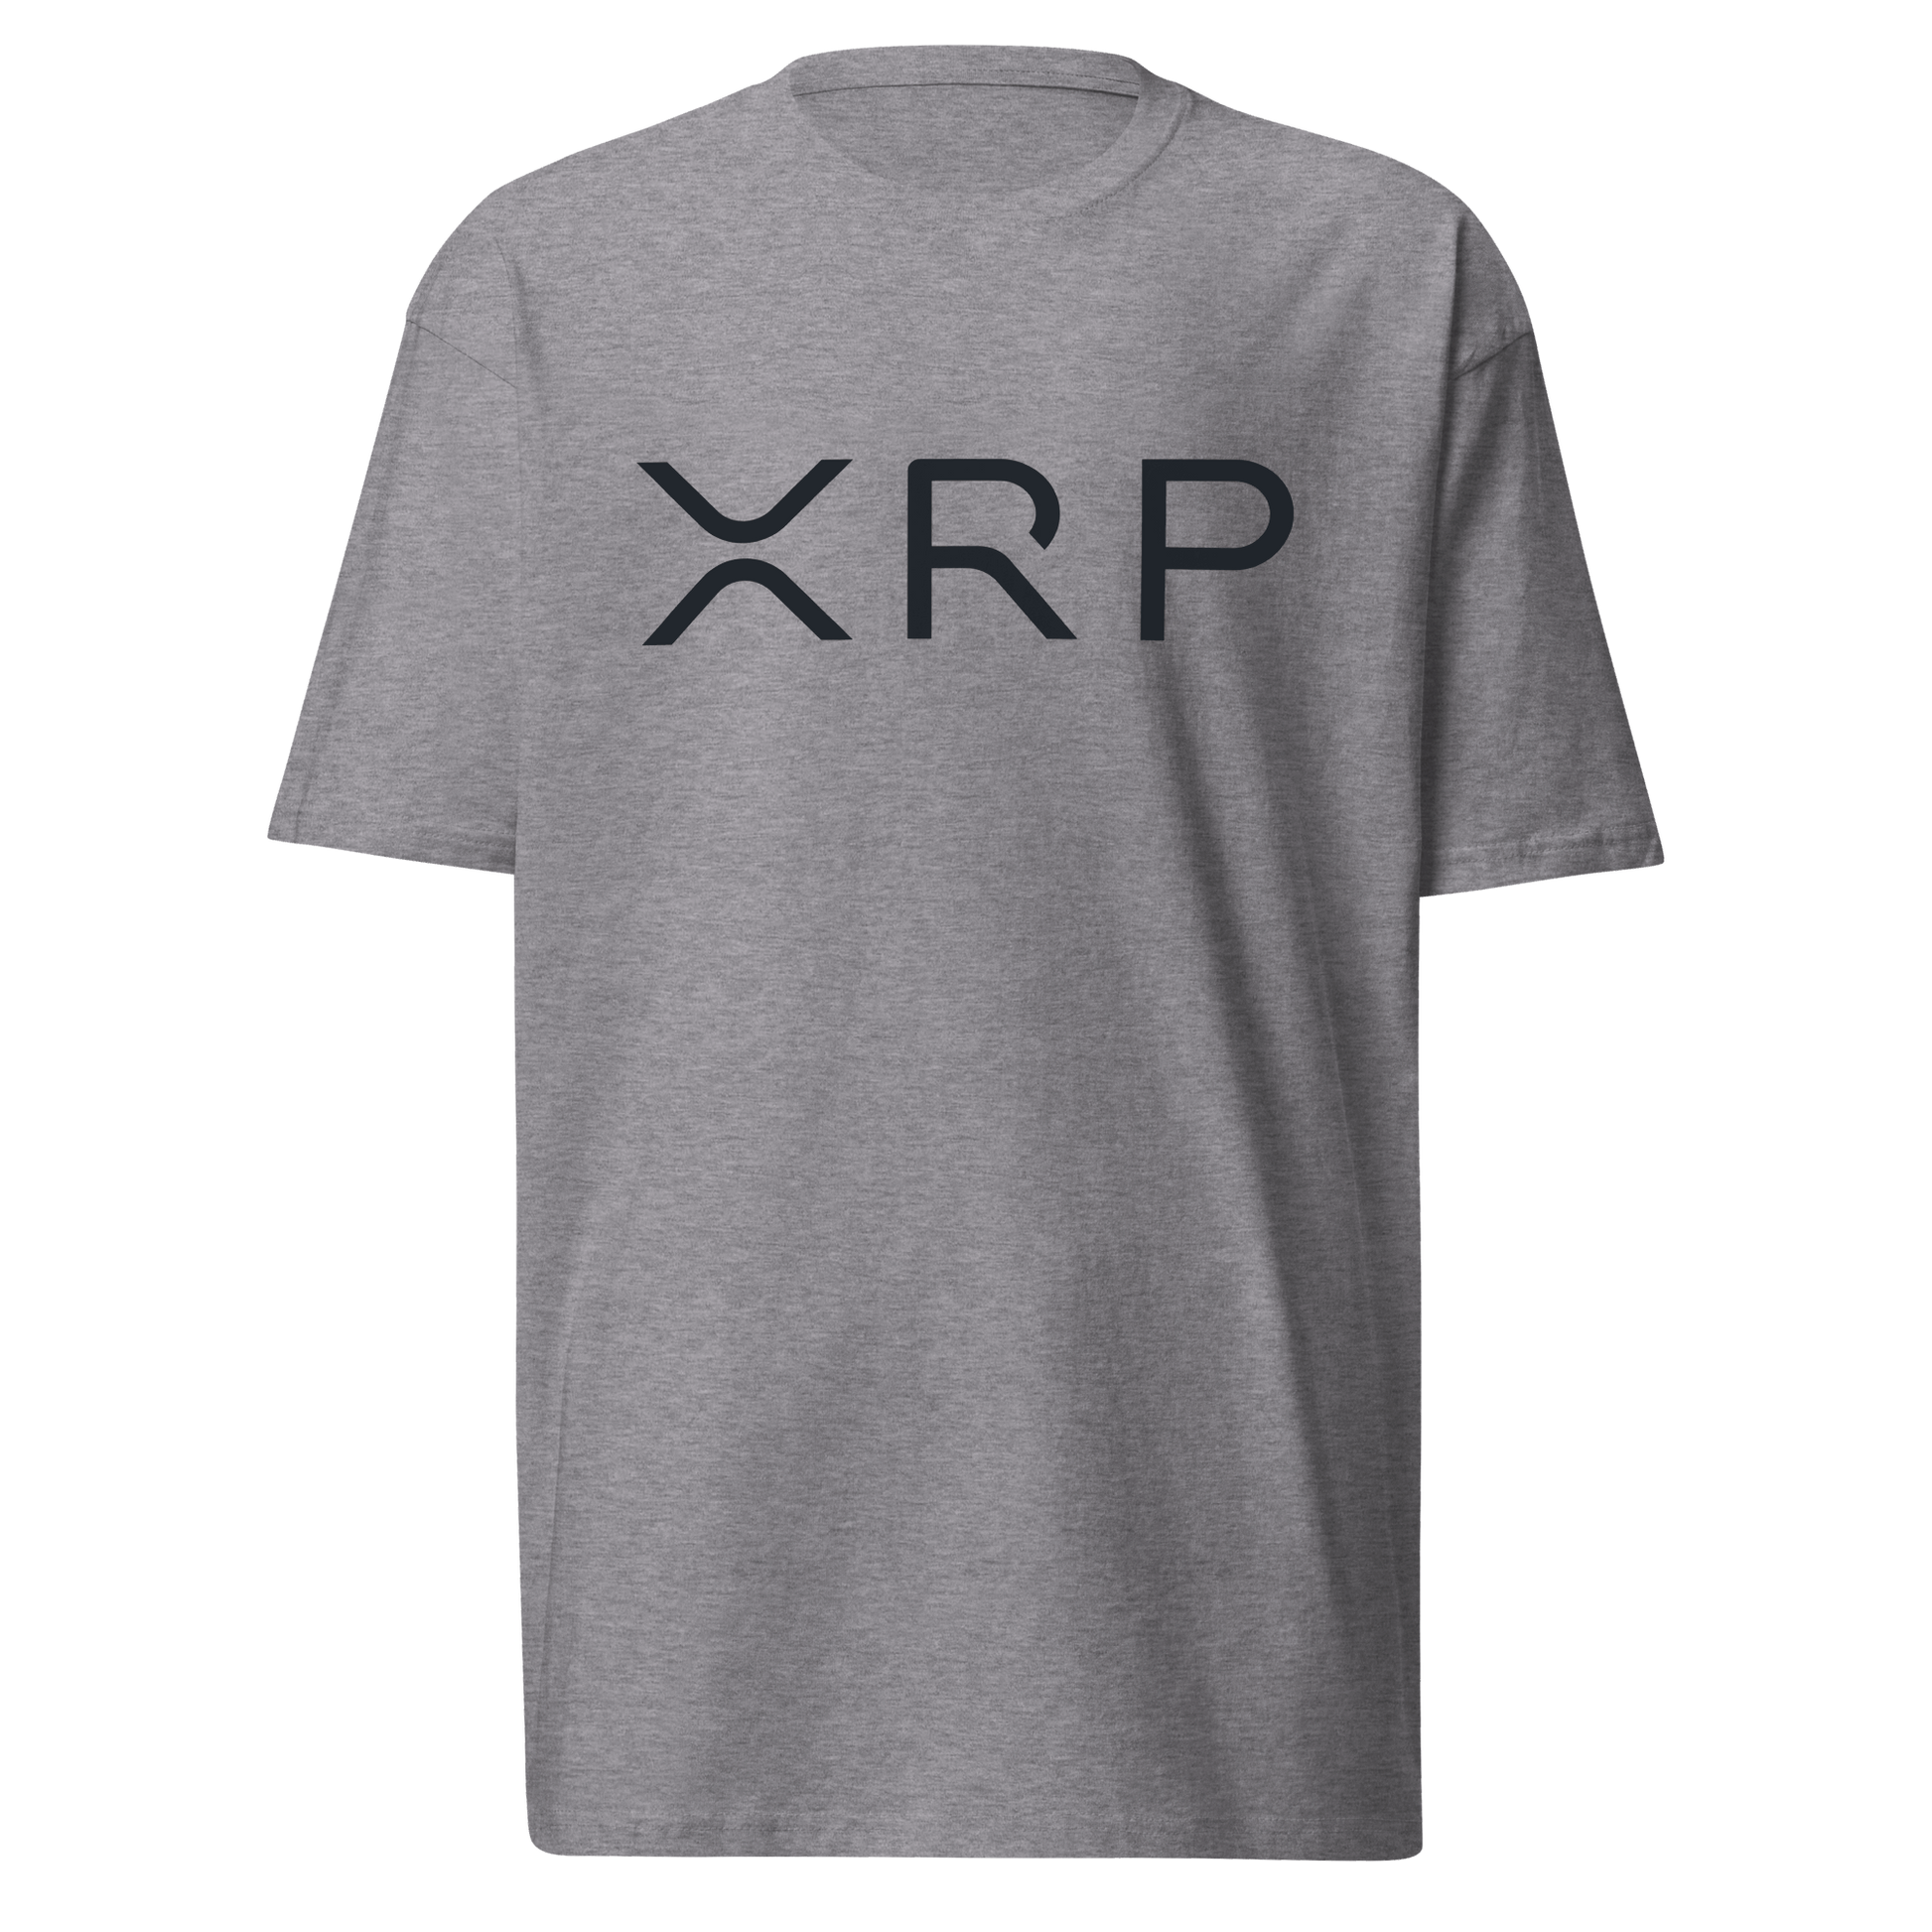 XRP Black Text - Men’s premium heavyweight tee